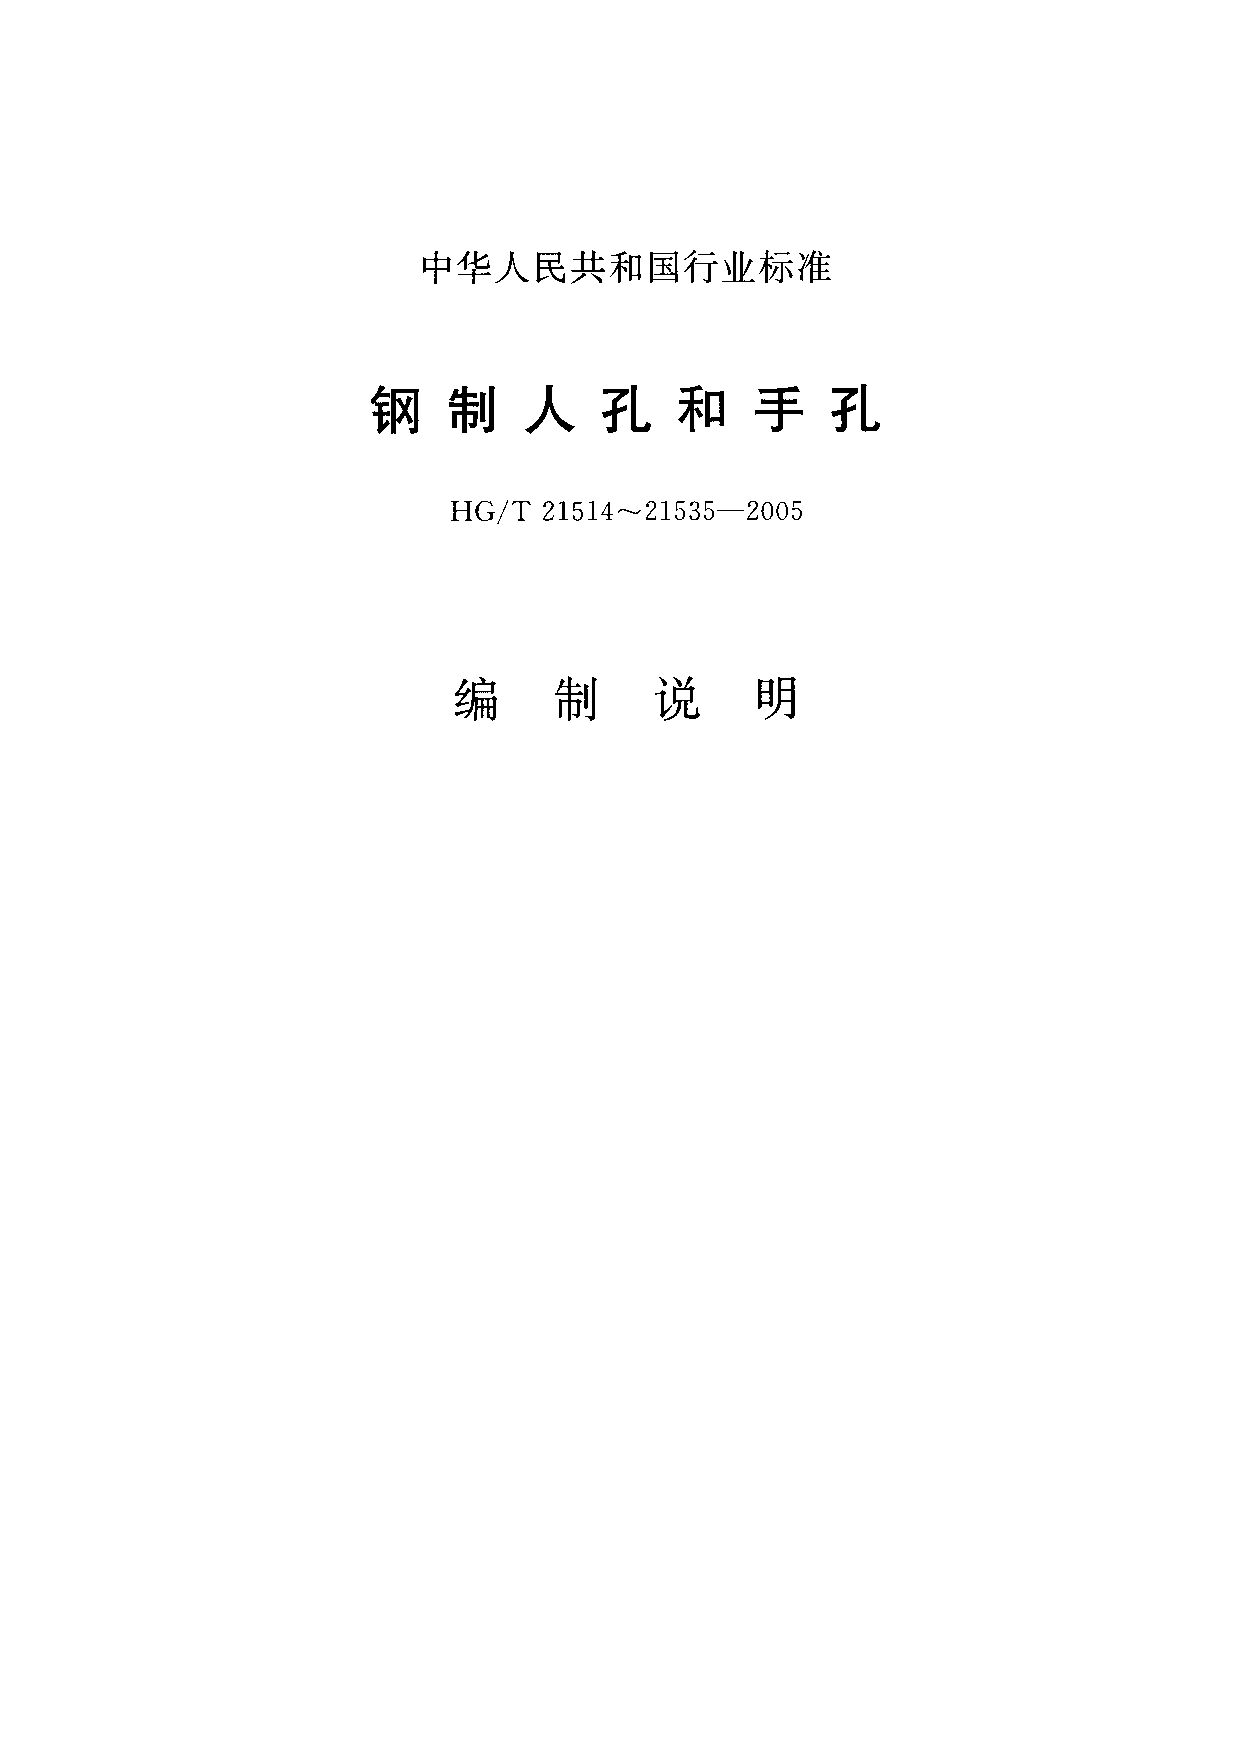 HG/T 21521-2005（编制说明）封面图